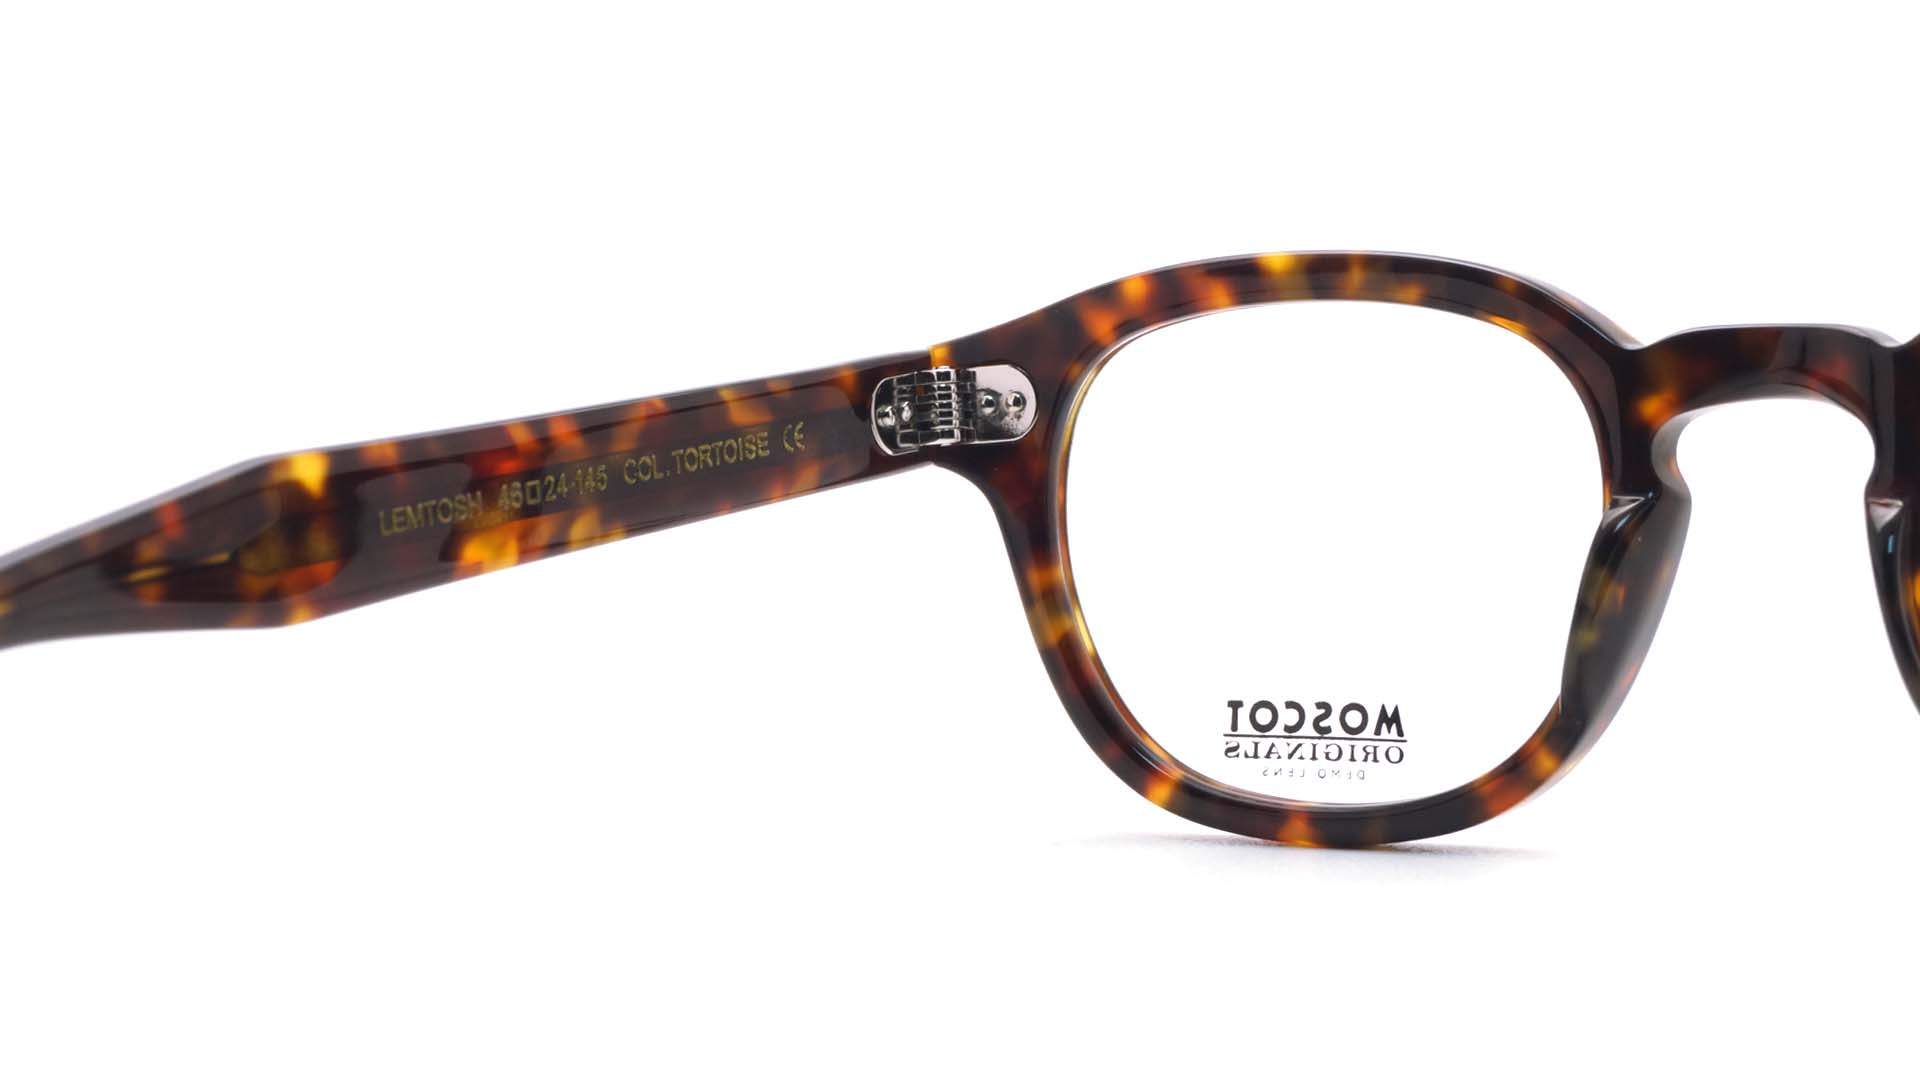 Eyeglasses Moscot Lemtosh Tortoise 49-24 in stock | Price 258,33